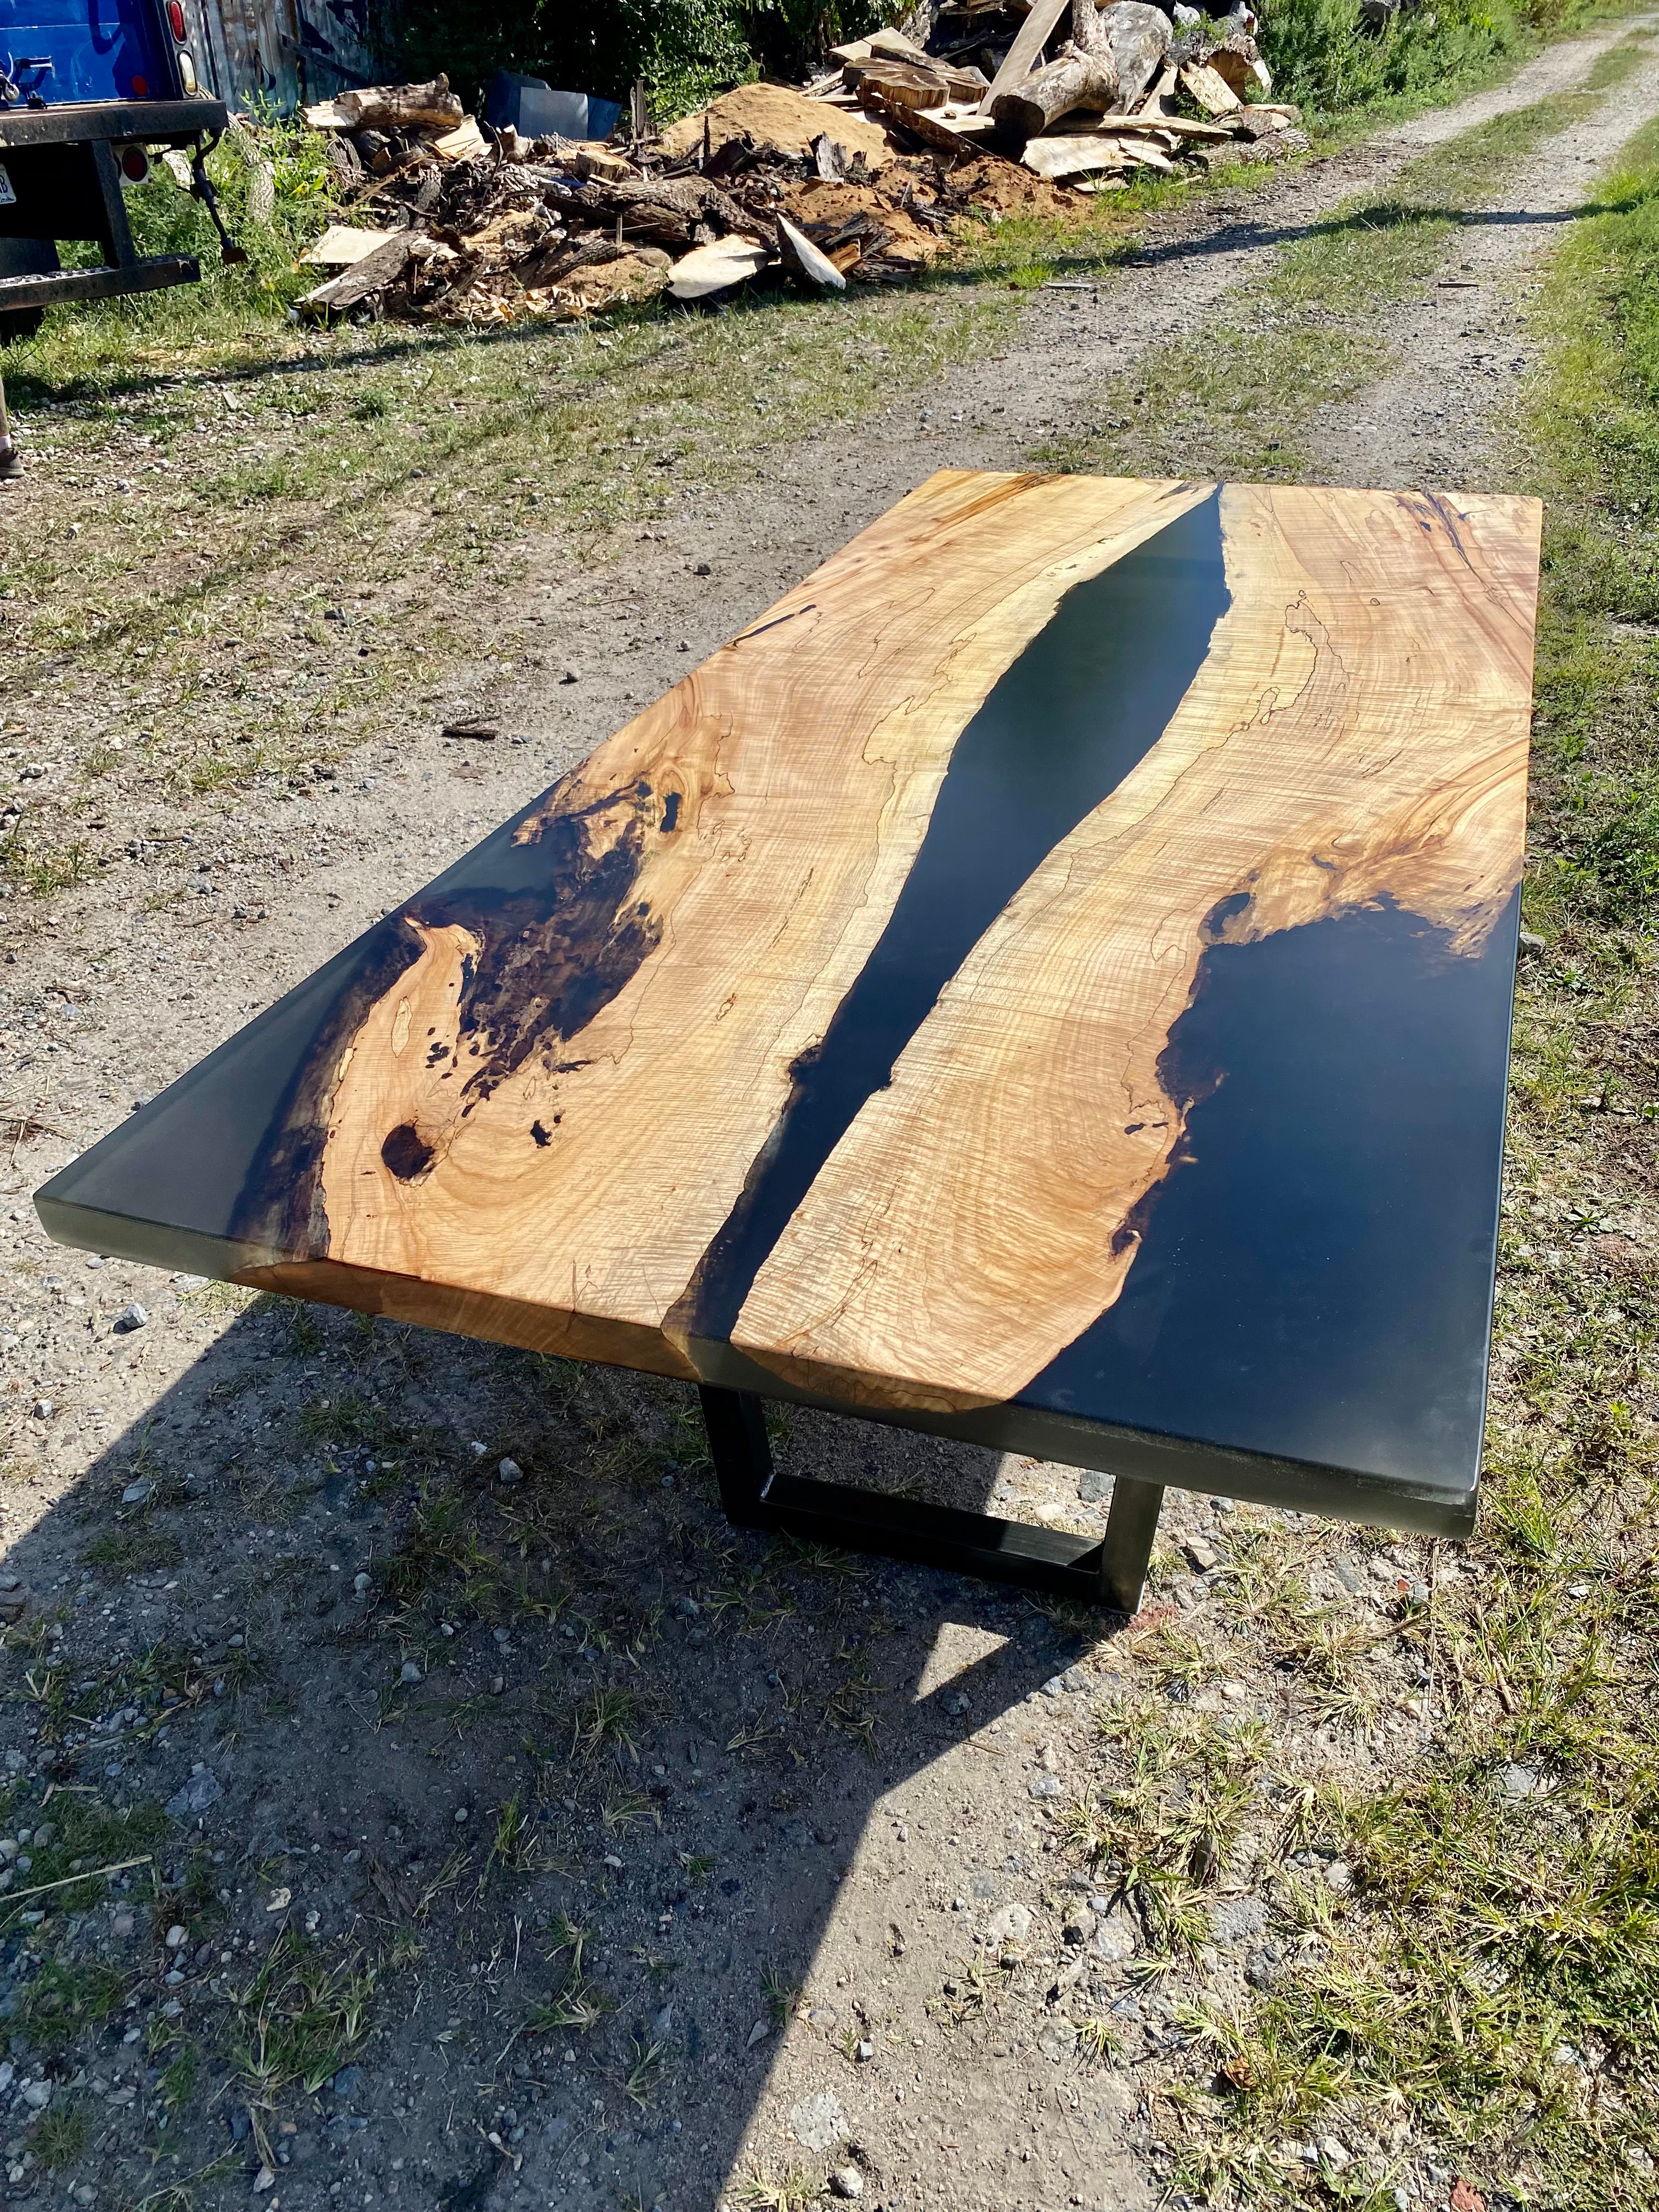 Refurbishing a cracked rustic oak table using black epoxy resin 